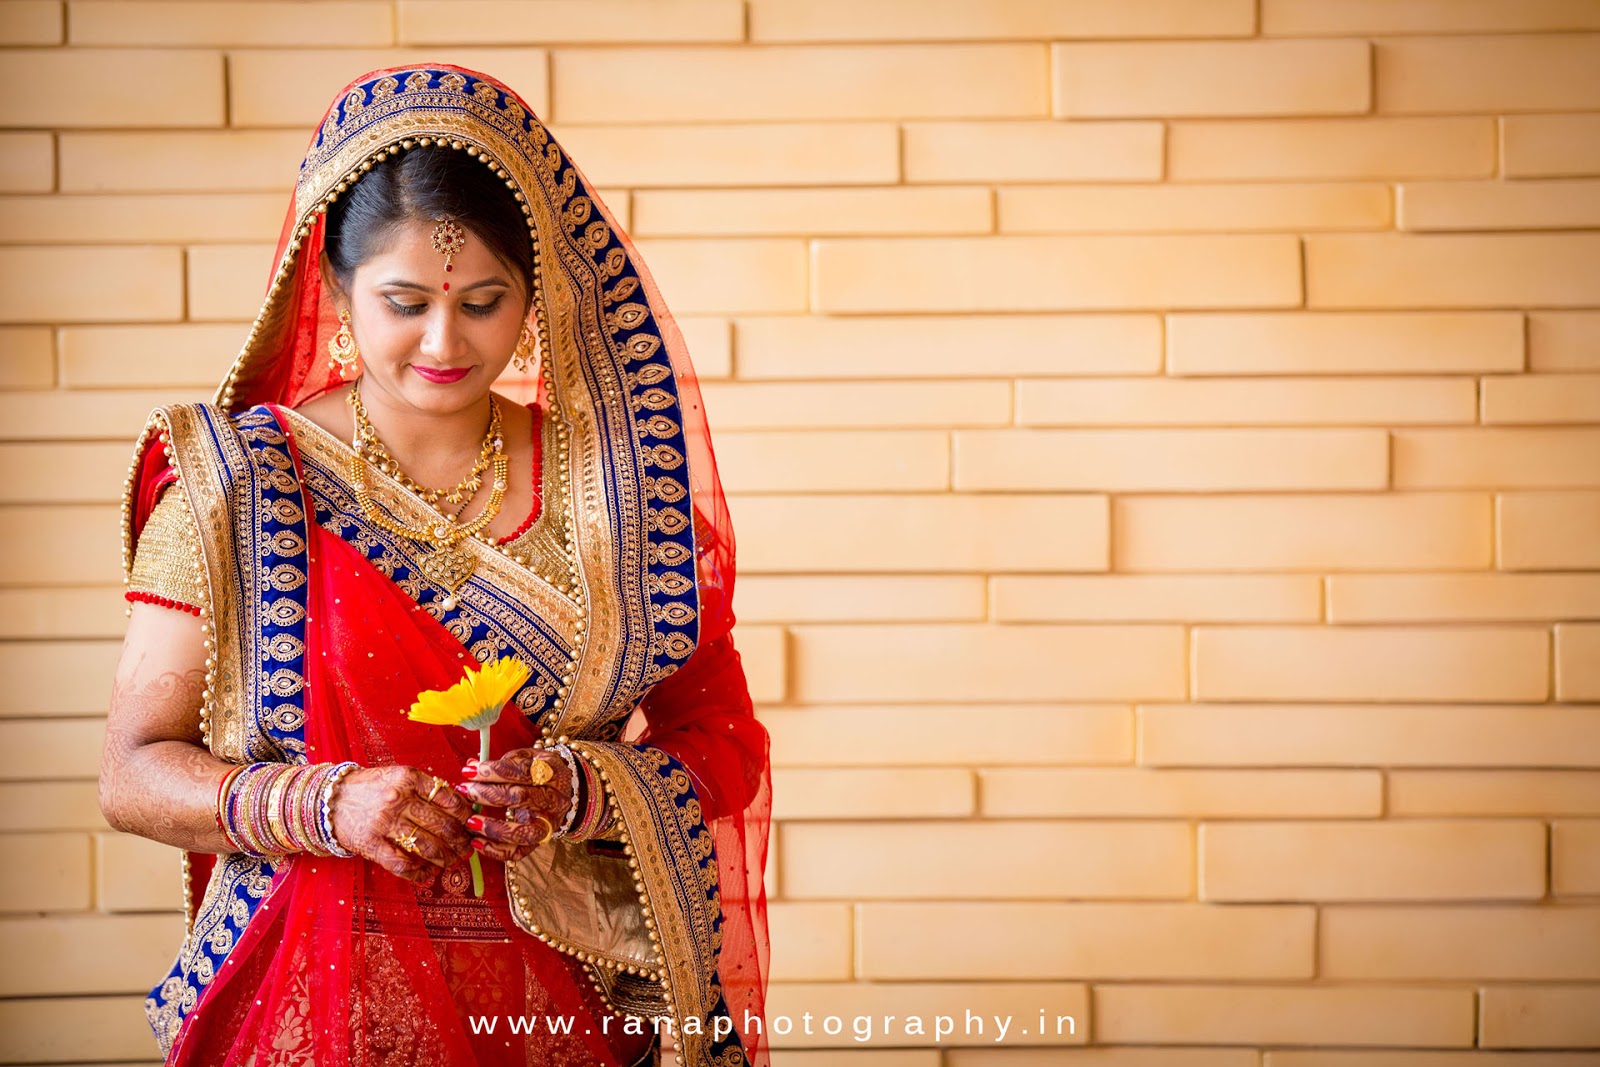 Candid Wedding Photography Bhubaneswar Odisha: Does Versatility Help In